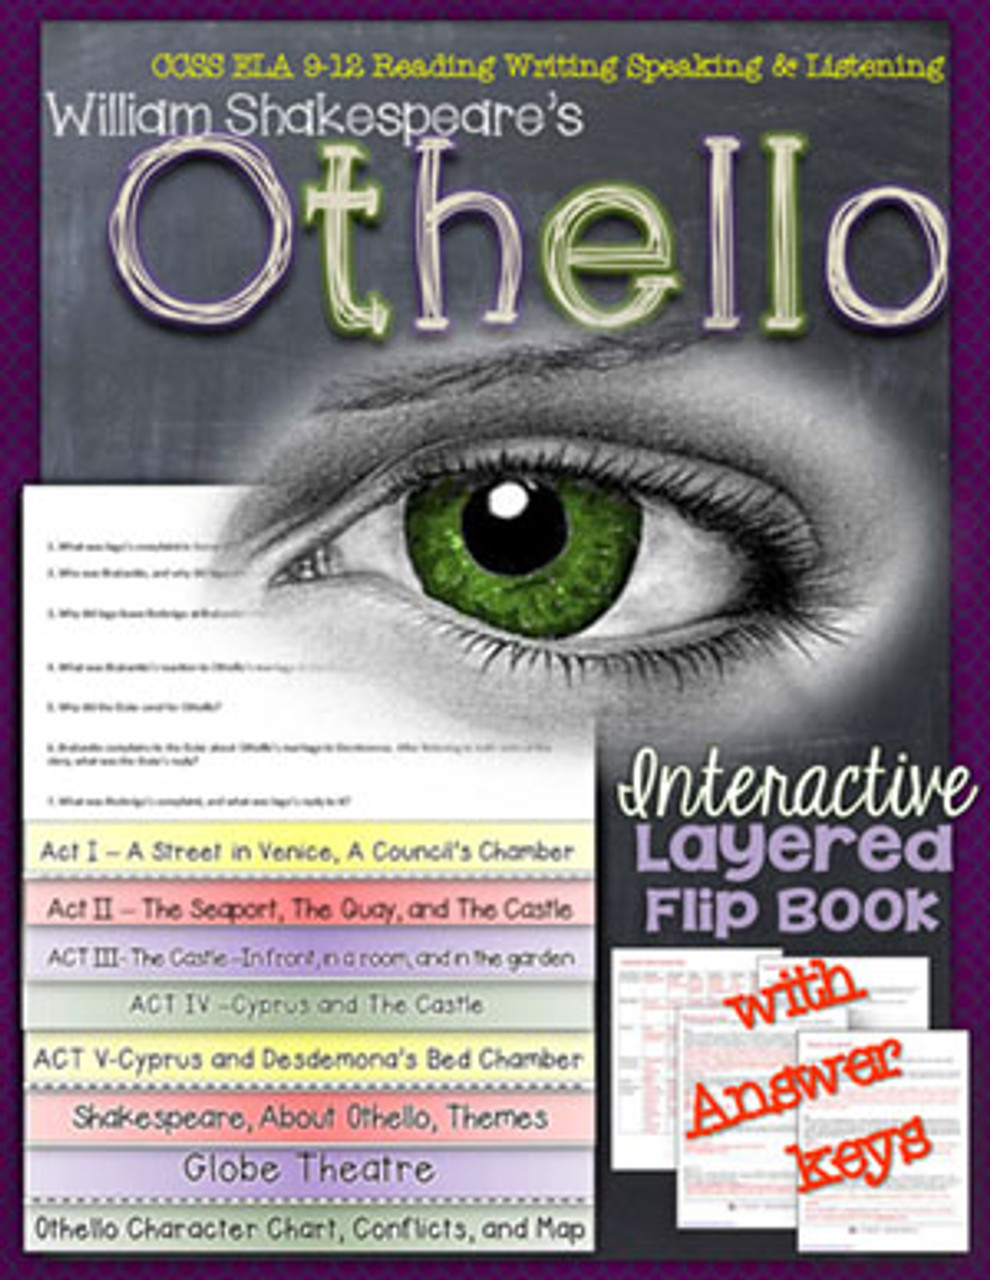 Othello Character Chart Worksheet